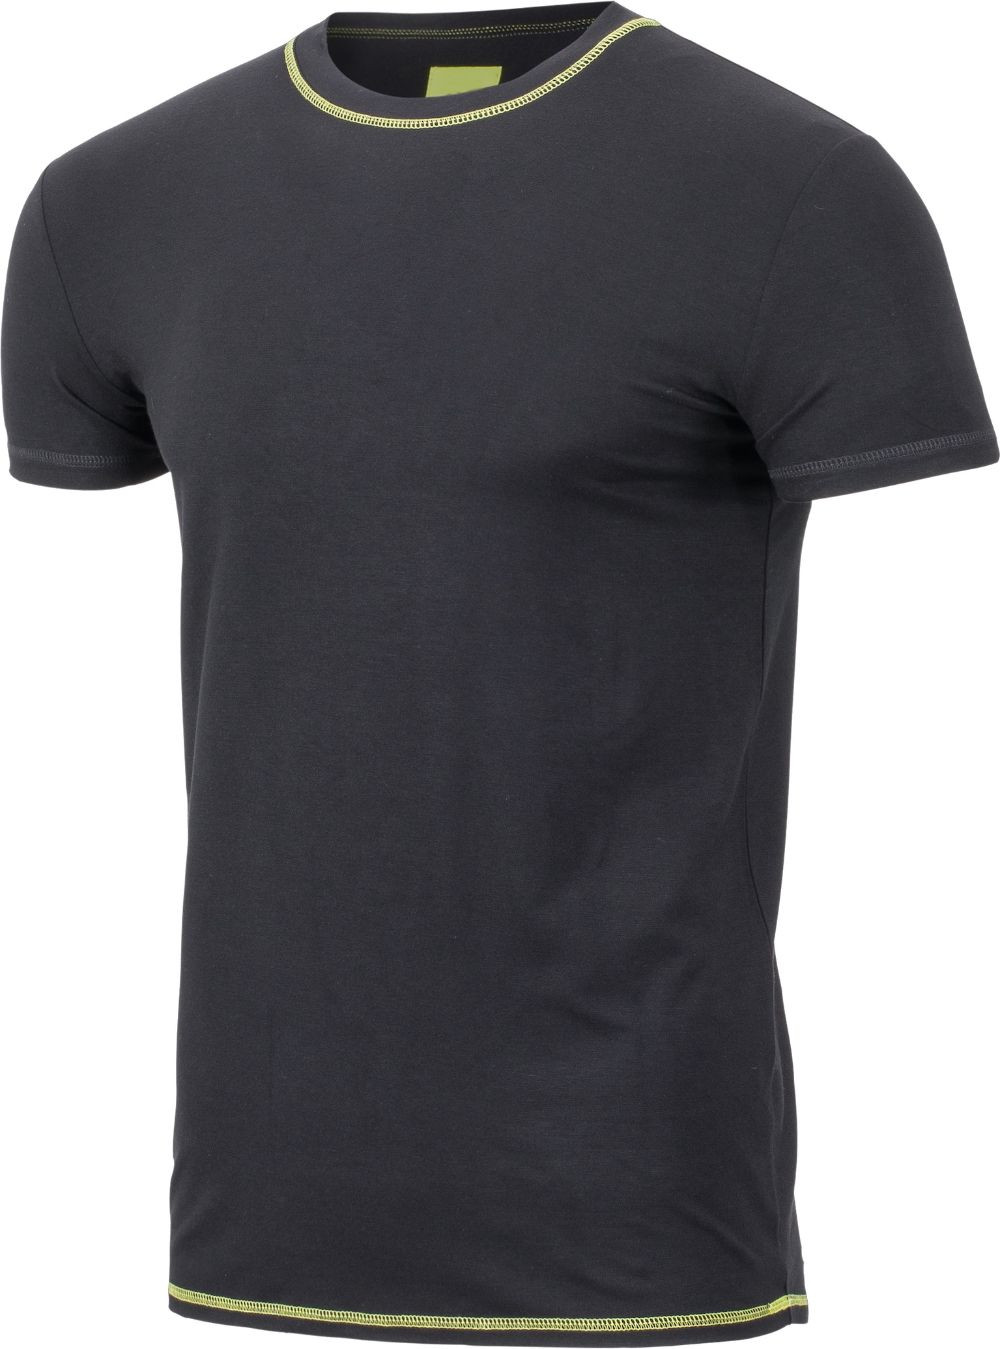 Visbatex T-Shirt Kurzarm – schwarz